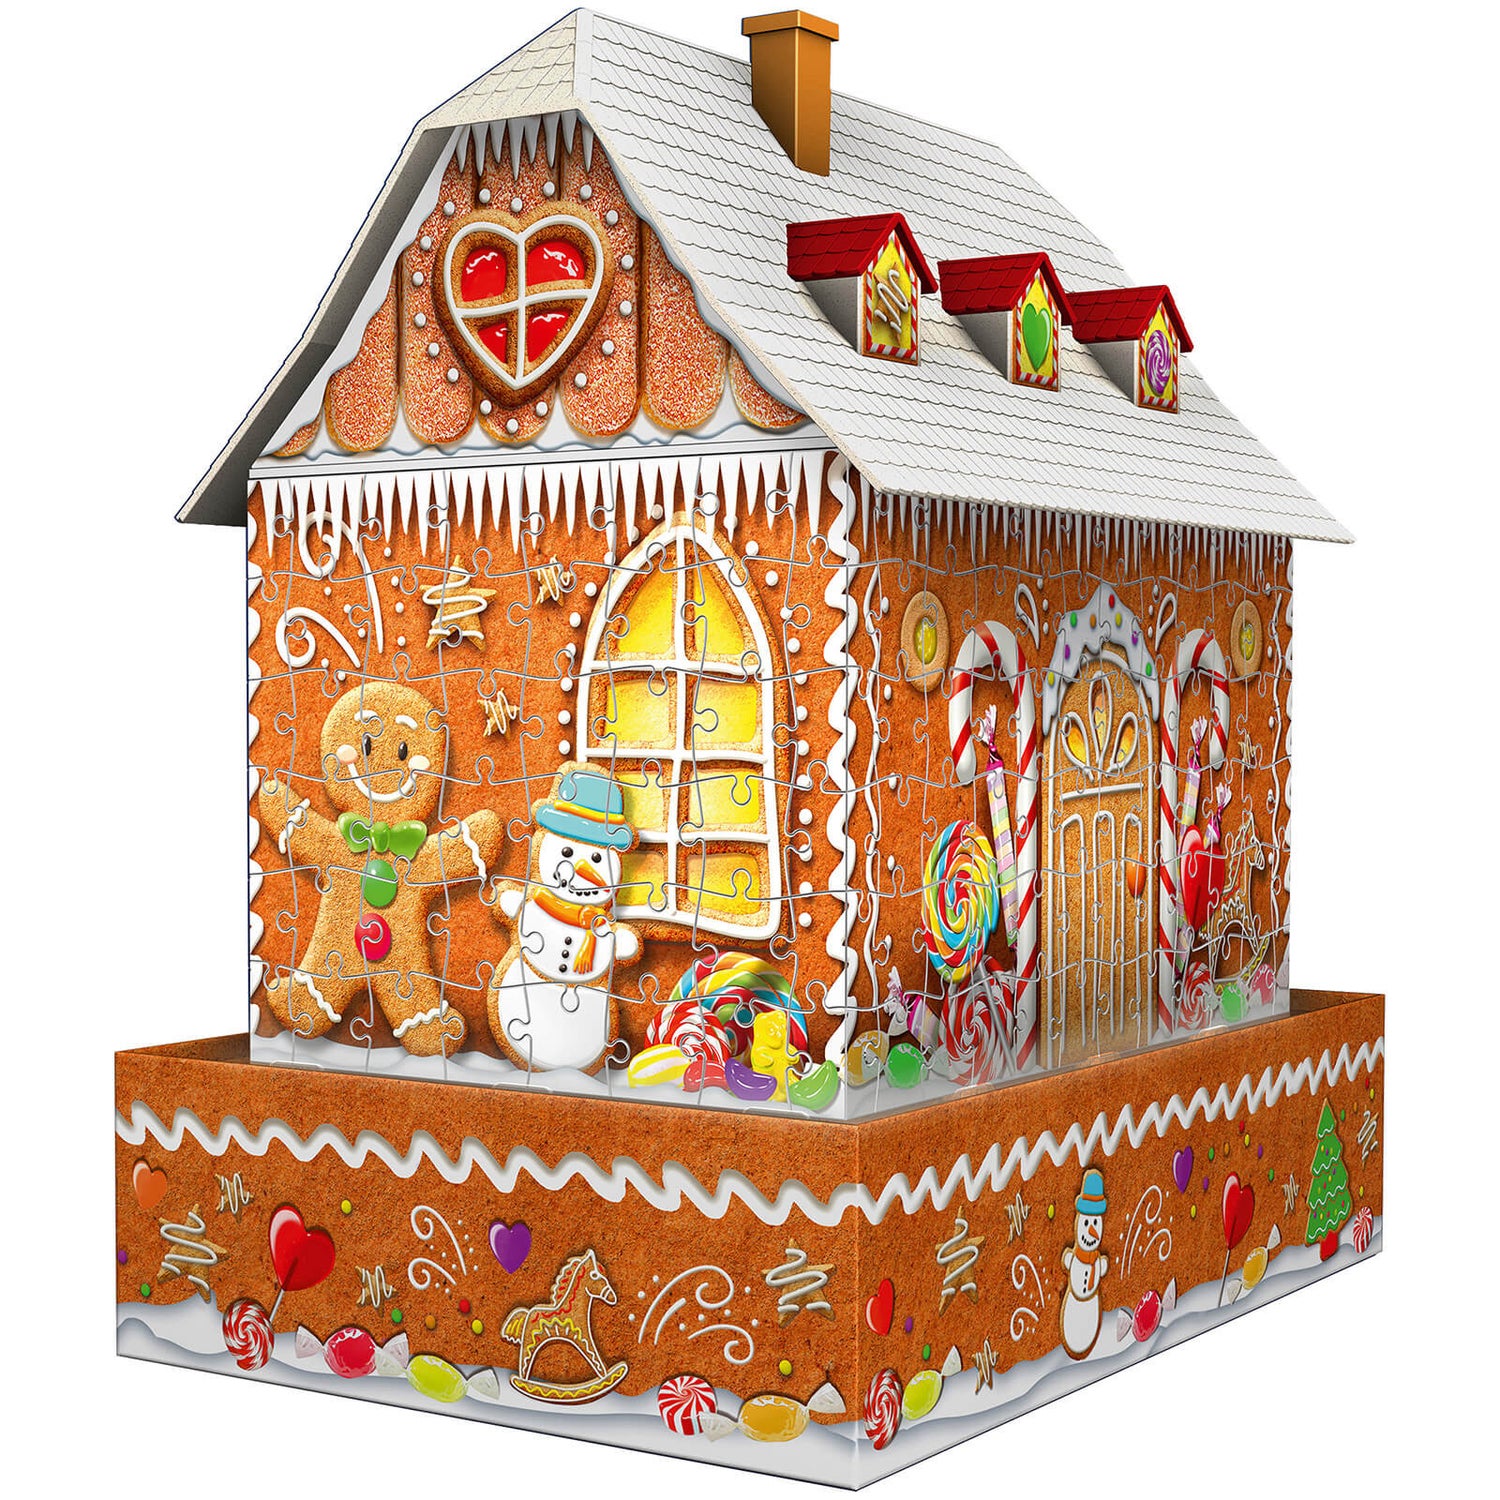 Ravensburger Christmas Gingerbread House, 216 piece 3D Jigsaw Puzzle